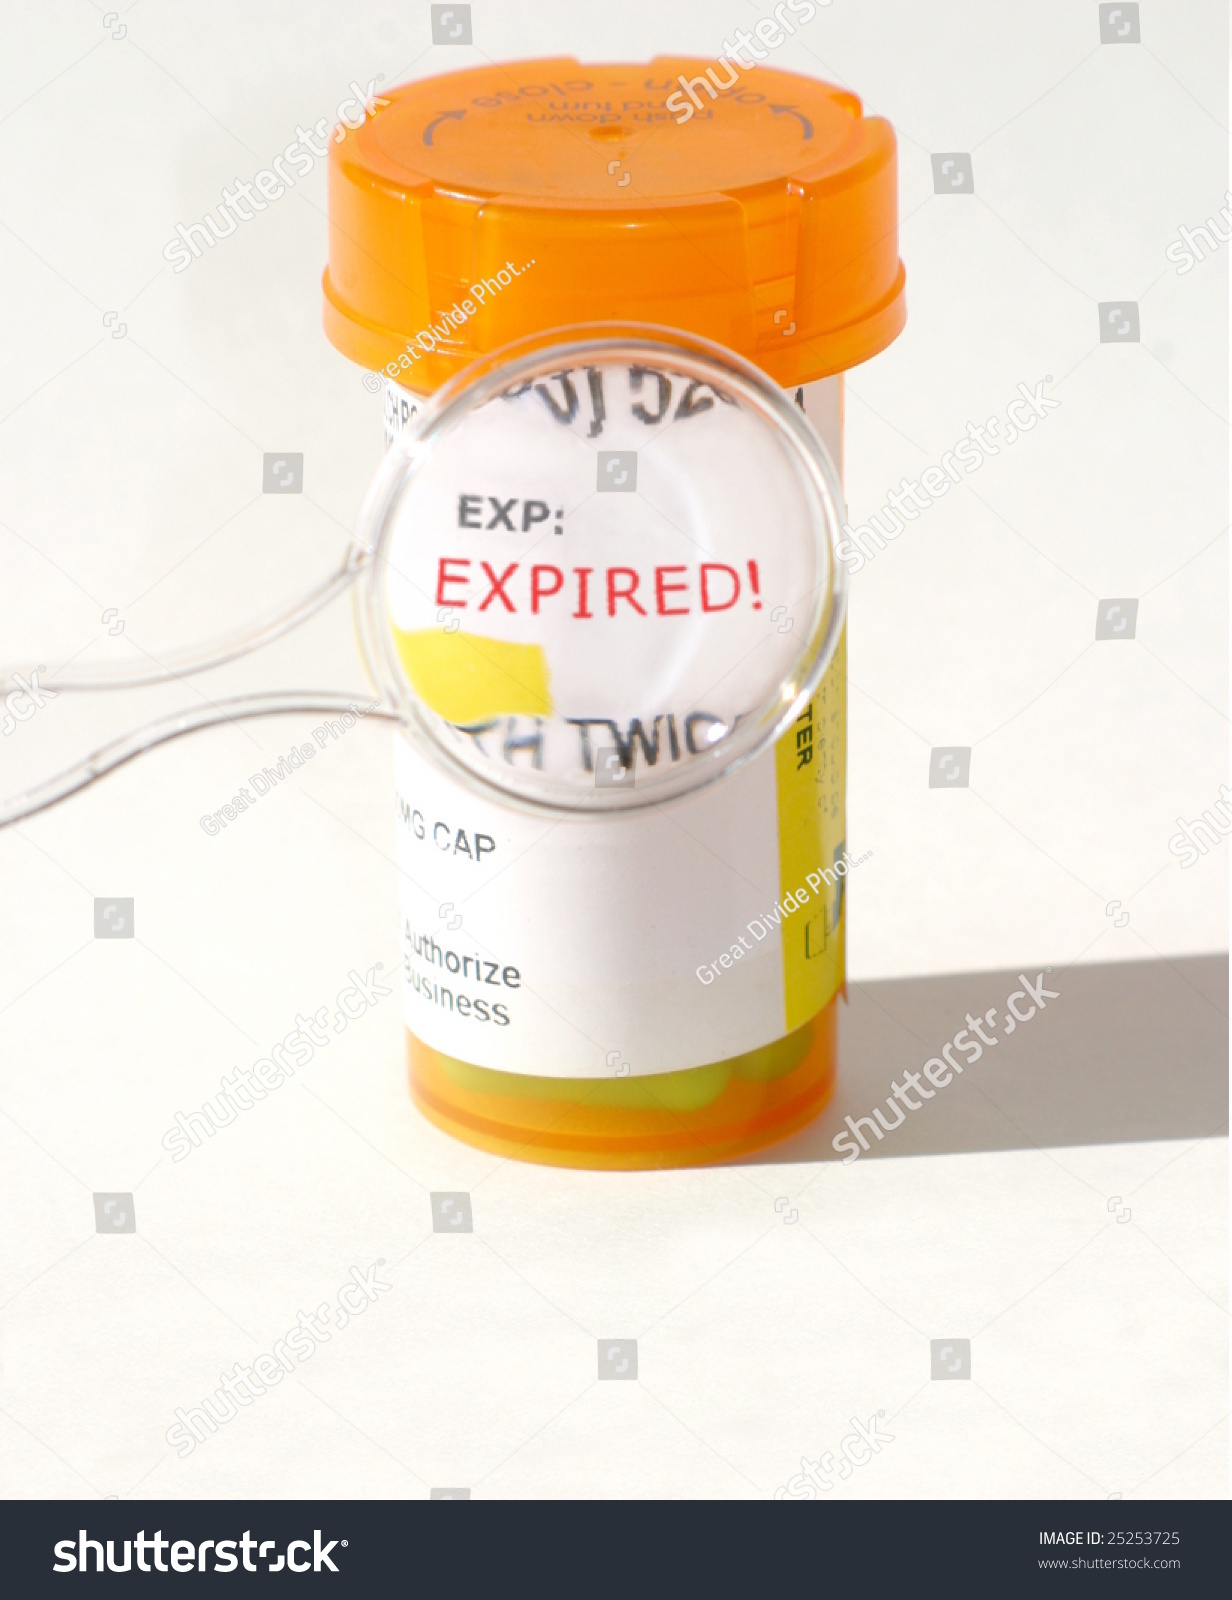 Expired bottle of prescription medicine pills that was stored for too long. Illustrating drug quality deterioration.  #25253725